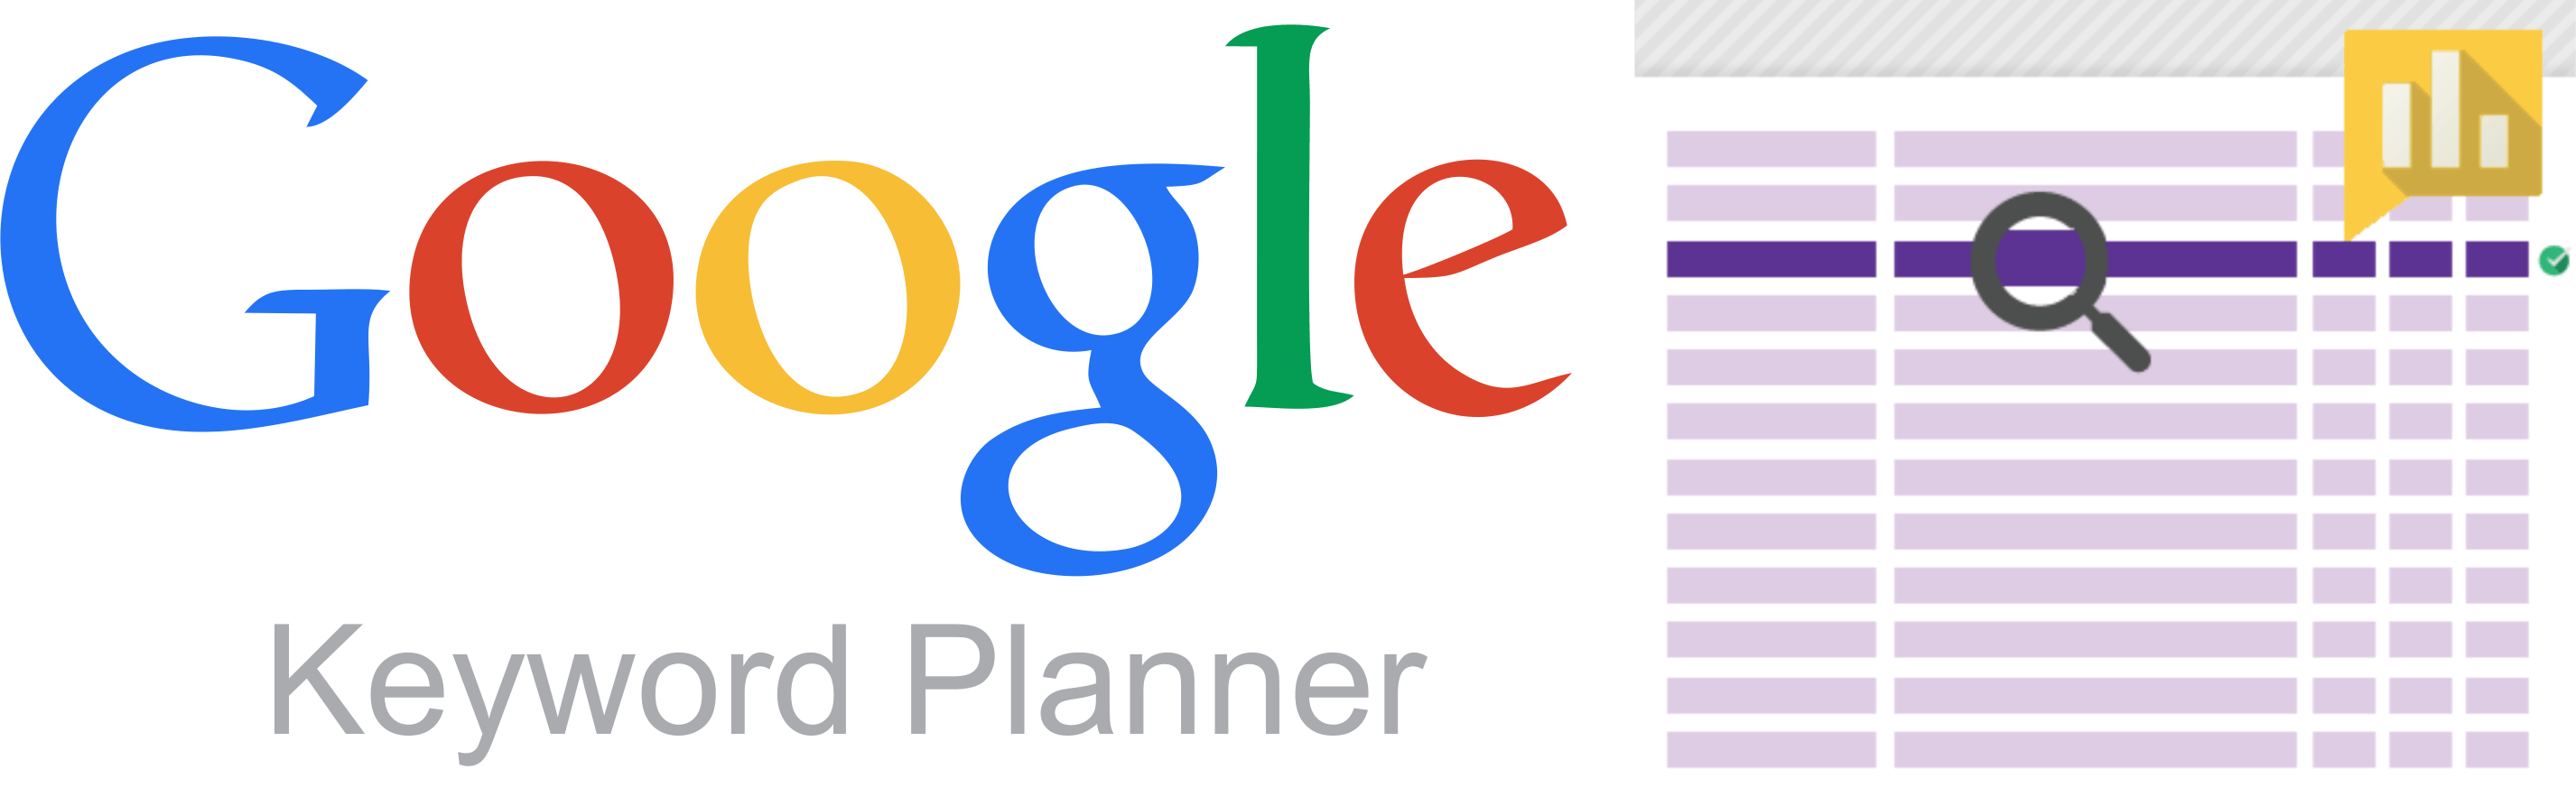 Google Keyword Logo - Google Keyword Planner